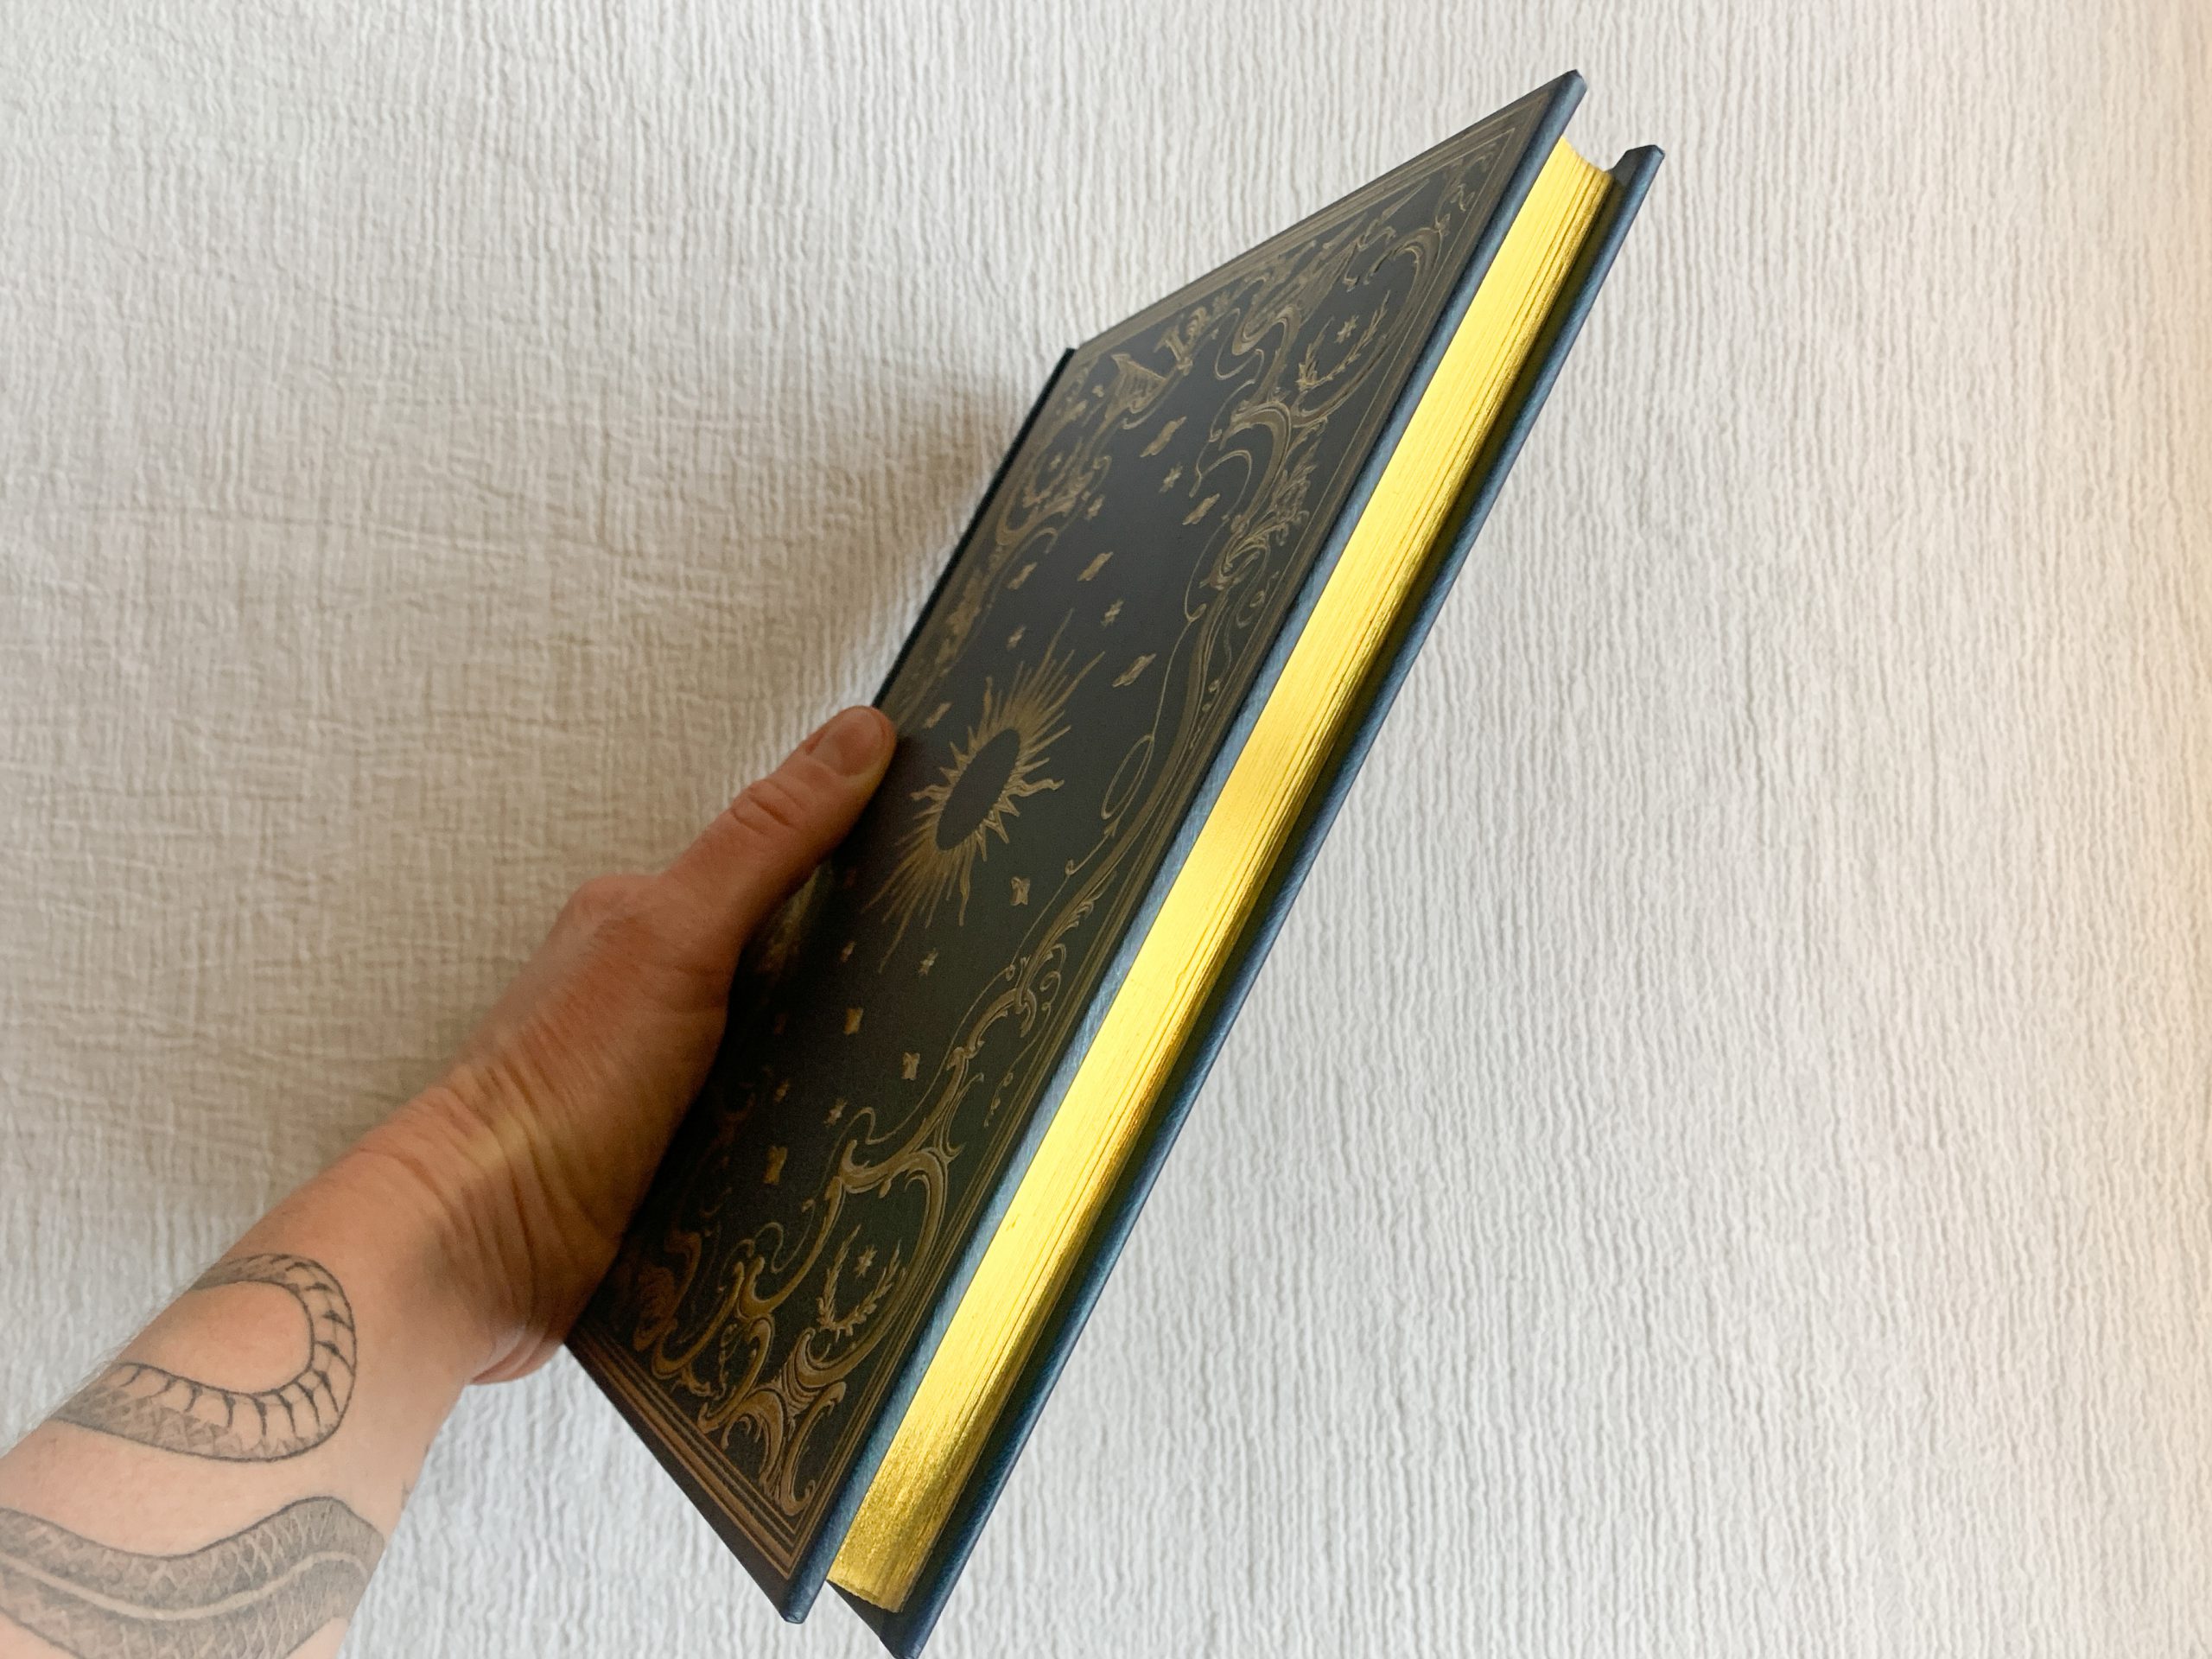 Gilded Rosettes Journal (Diary, Notebook)